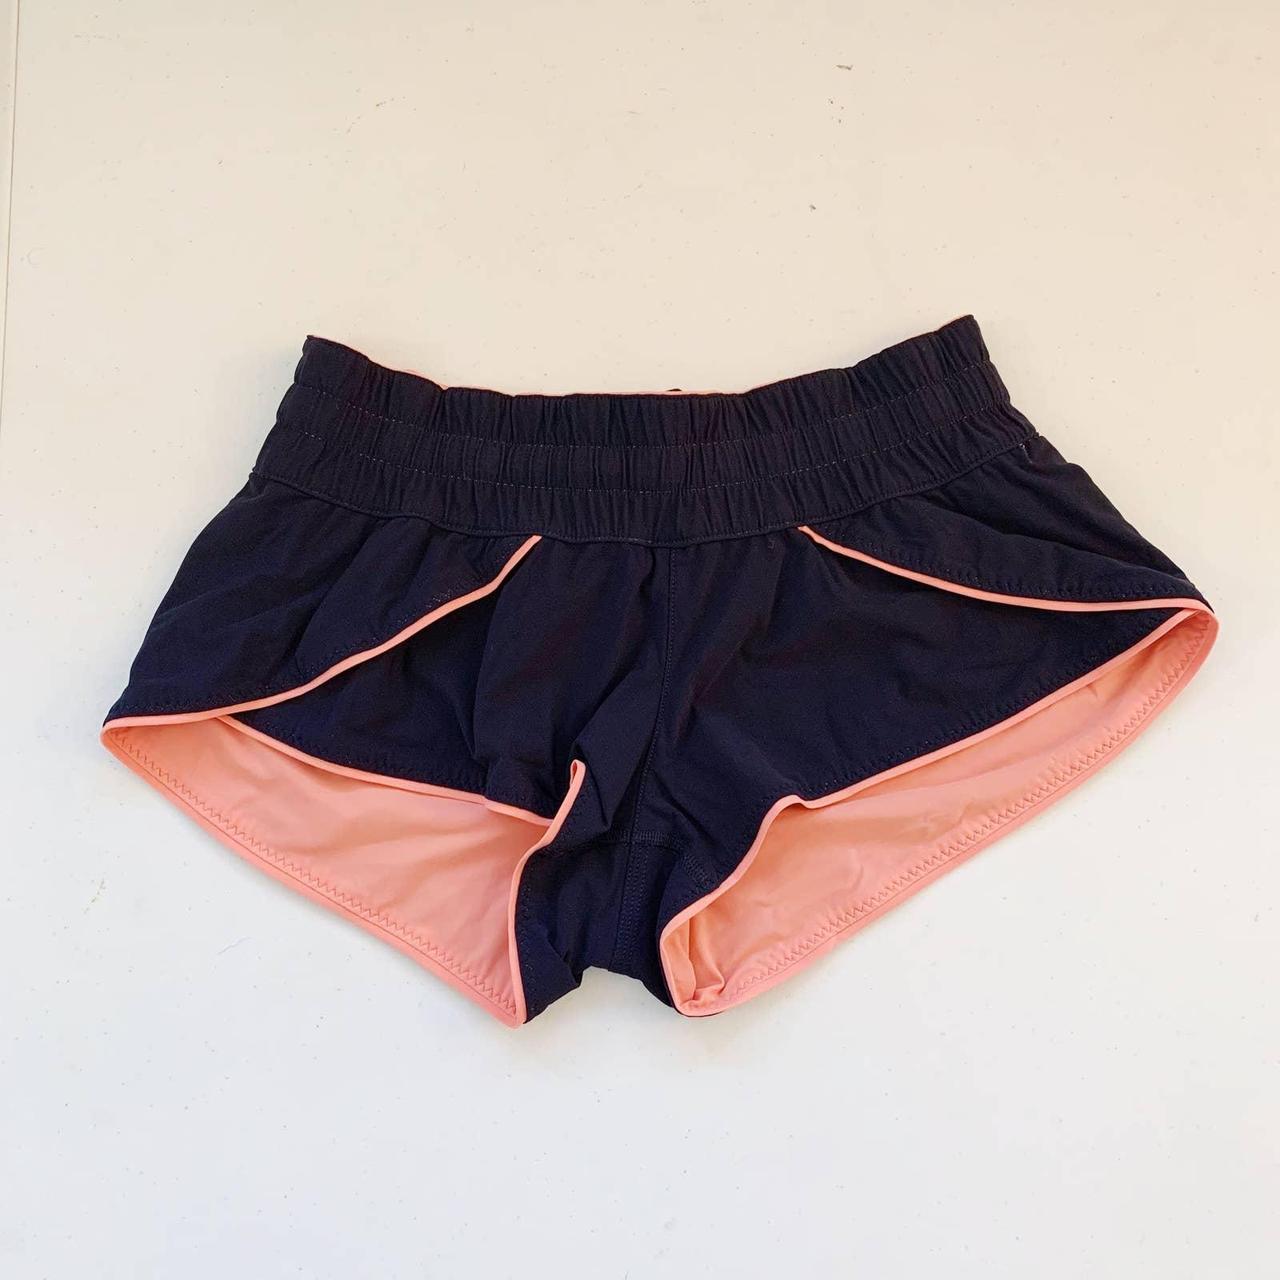 Reversible Lululemon Athletica shorts with tie. - Depop